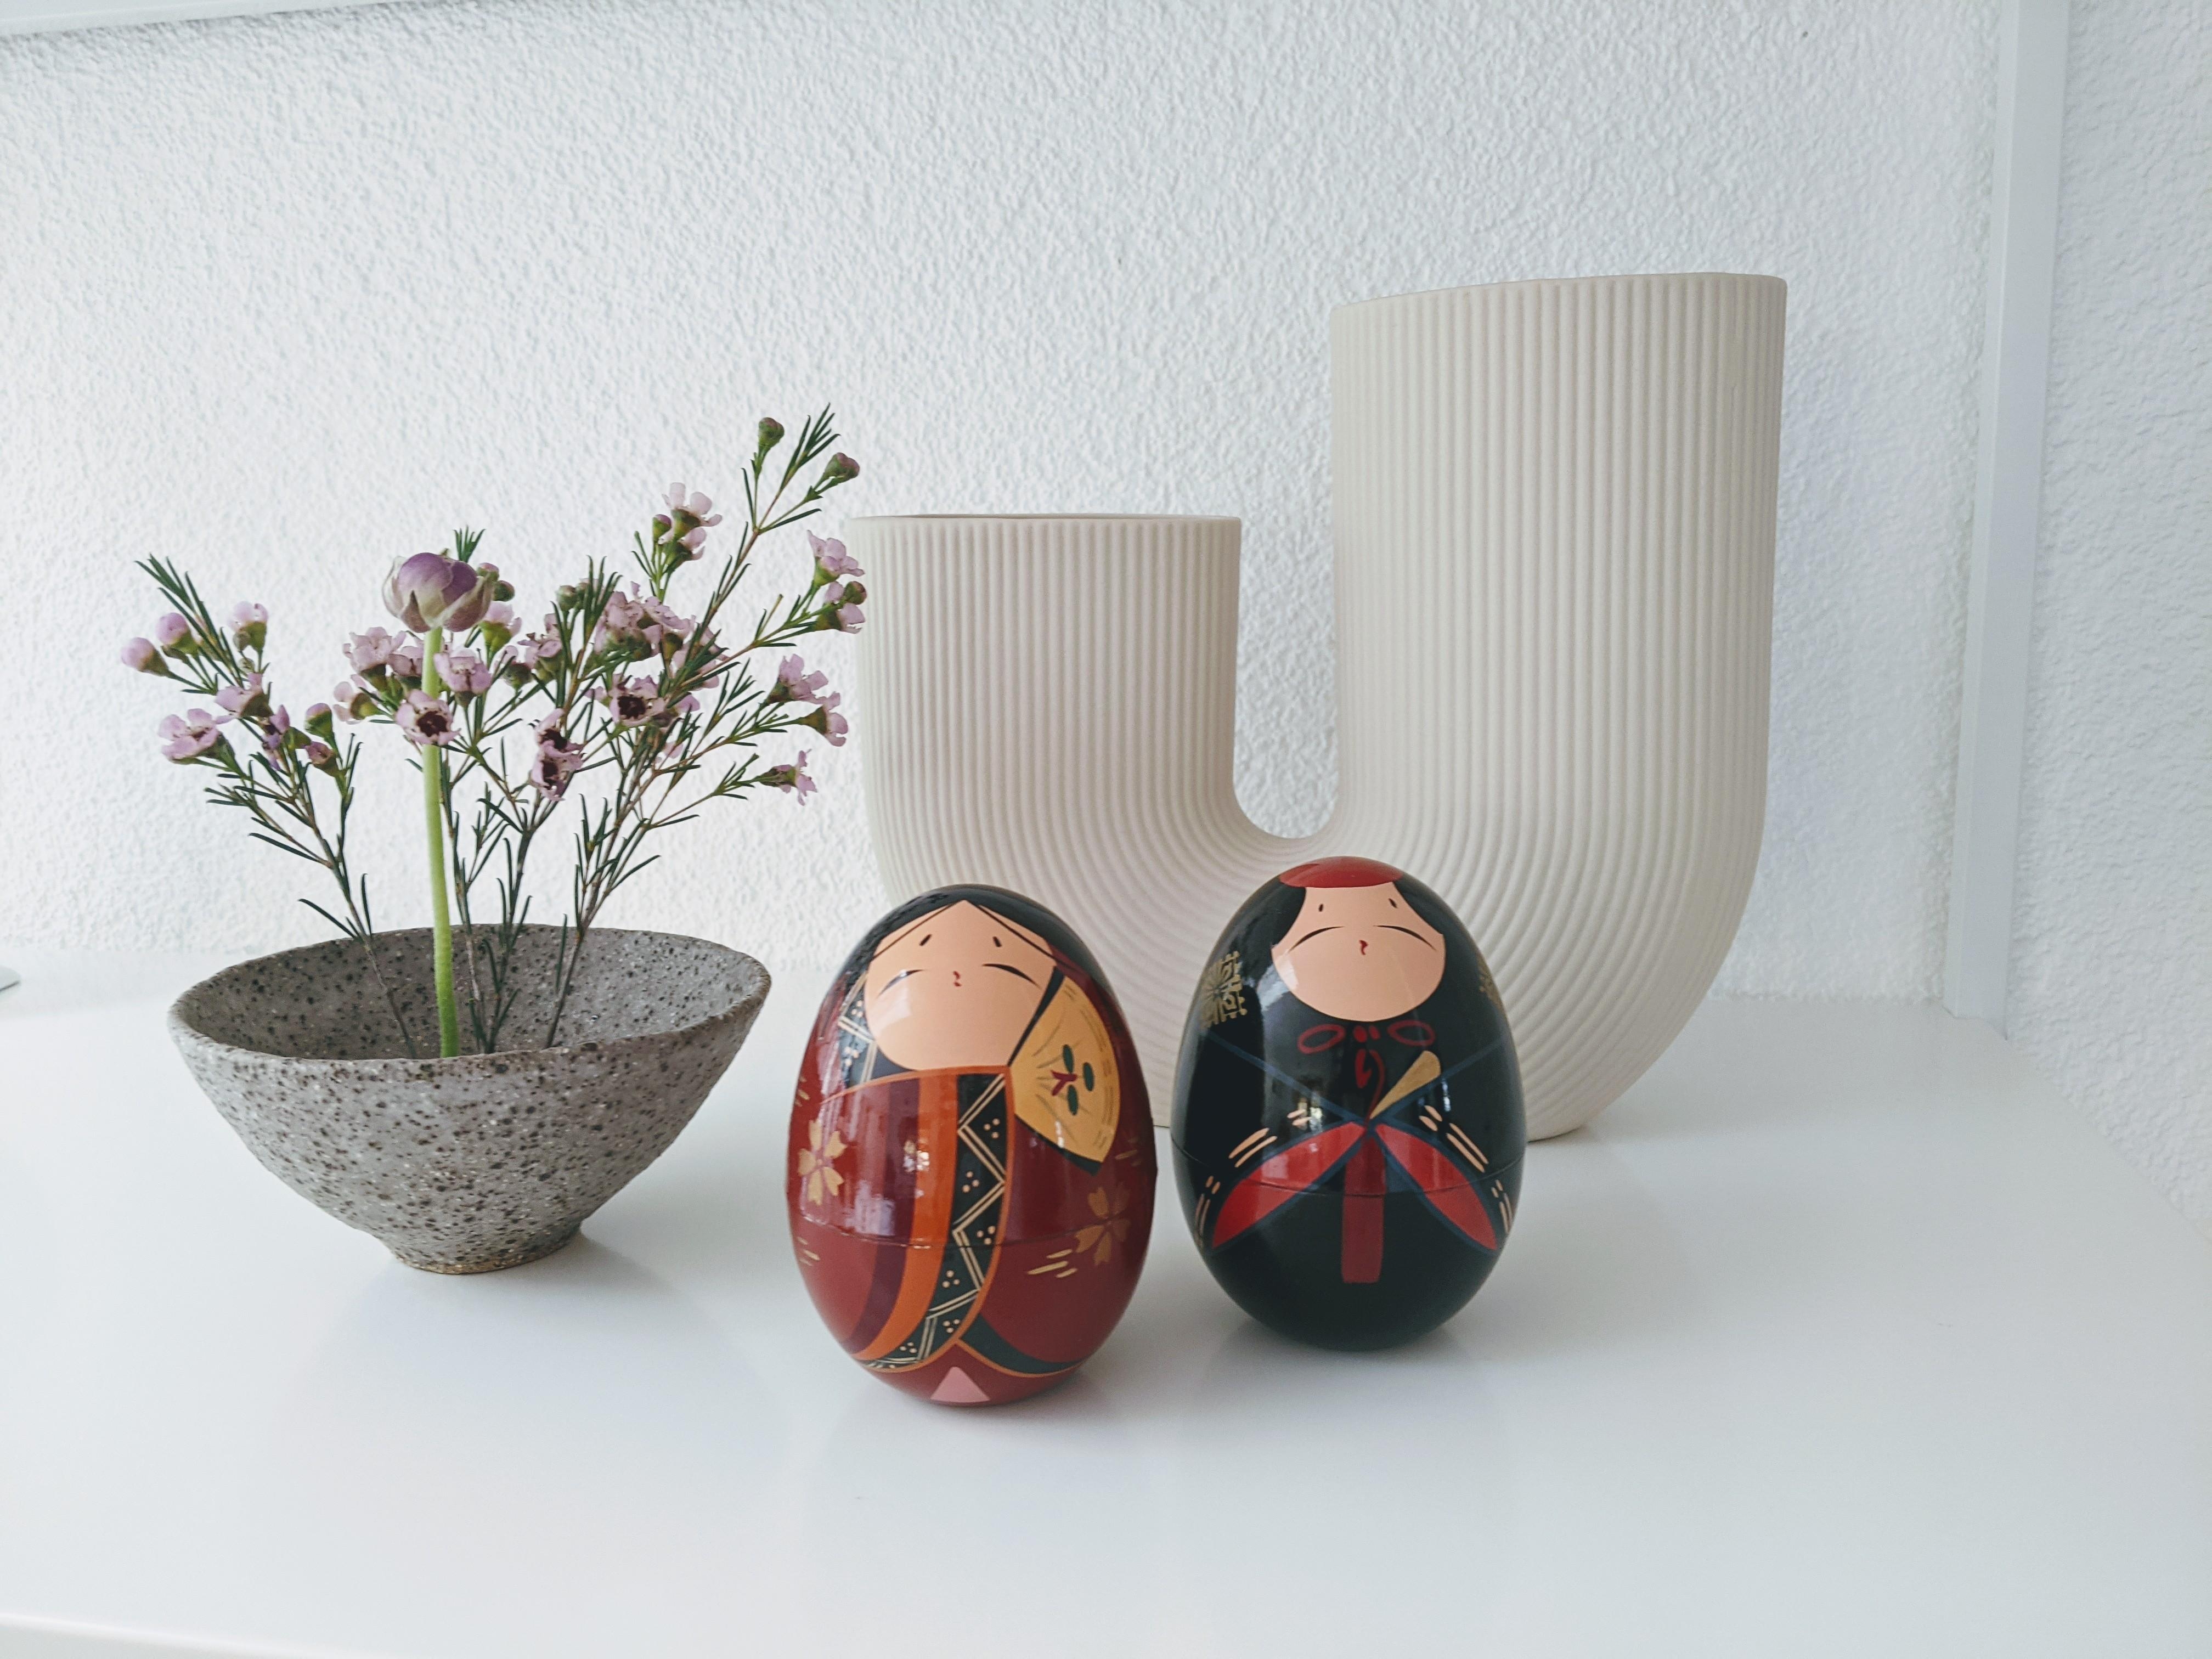 Japan trifft Skandinavien 🤎
#couchstyle #regalliebe #esszimmer #vase #kokeshi #ikebana #blumen